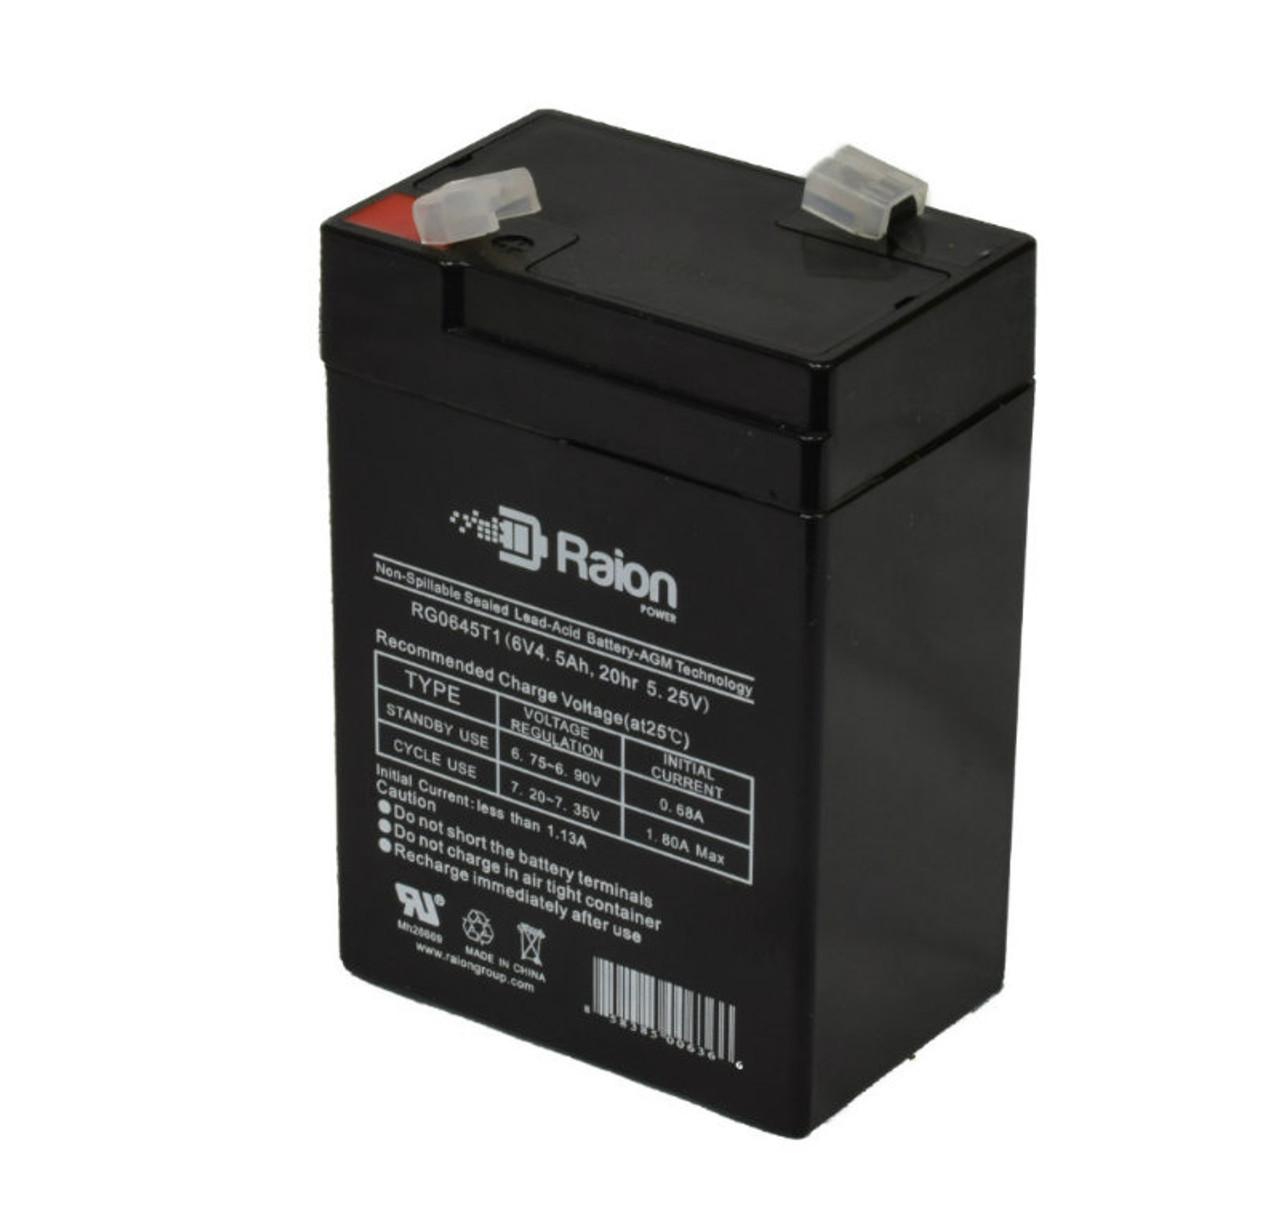 Raion Power RG0645T1 6V 4.5Ah Replacement Battery Cartridge for Douglas DG64WL